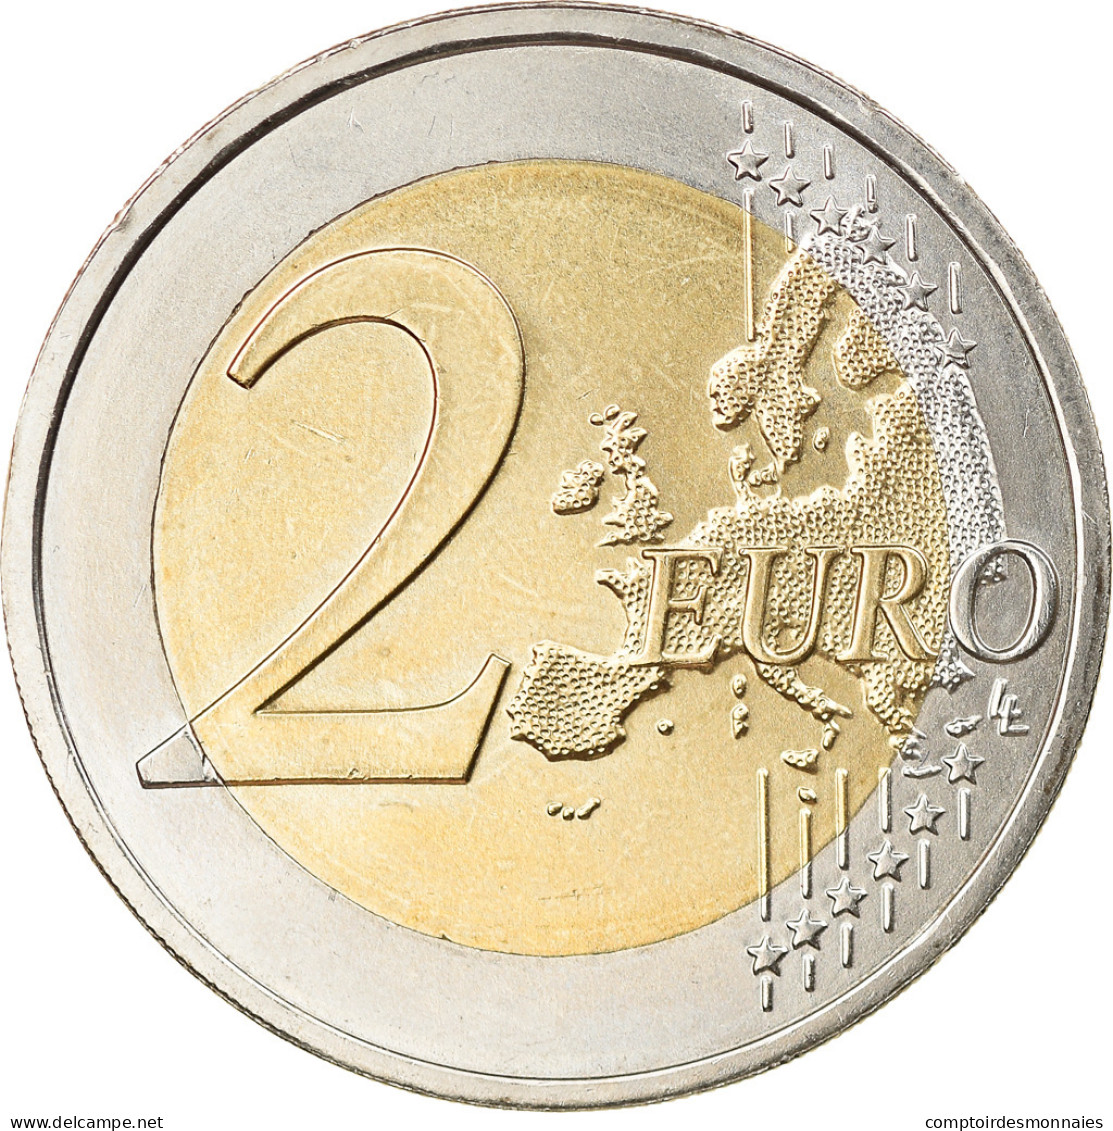 Slovaquie, 2 Euro, Cyrille, Methode, 2013, Kremnica, SPL, Bi-Metallic, KM:128 - Slovaquie